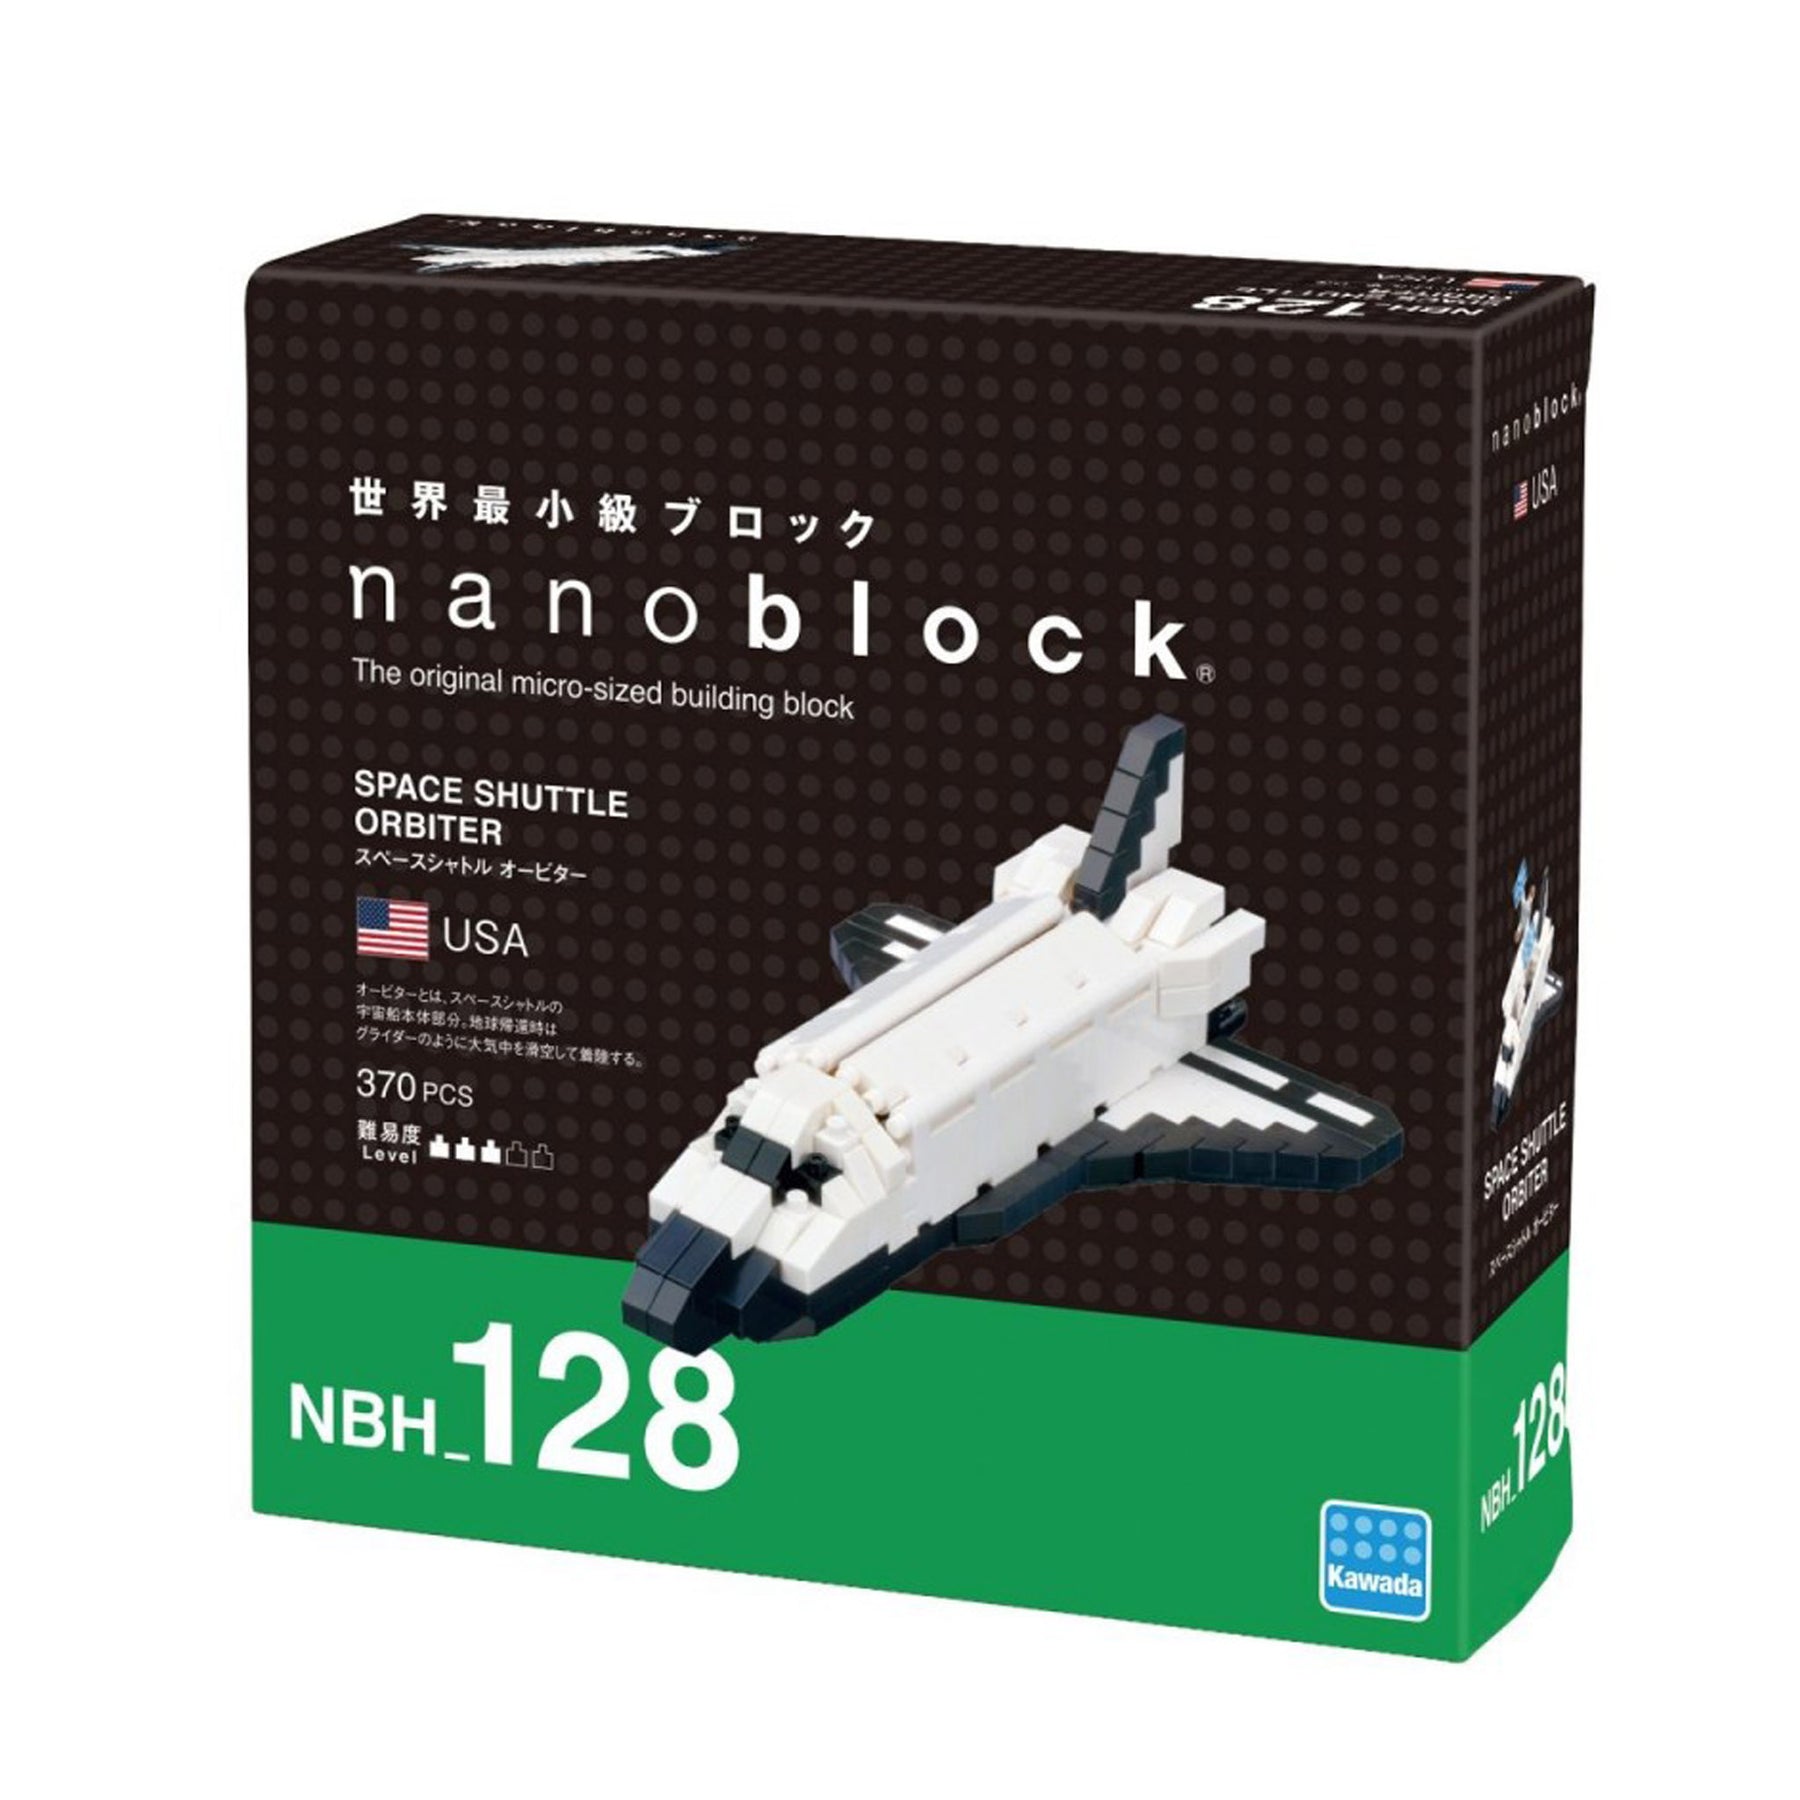 NBH_128 Space Shuttle